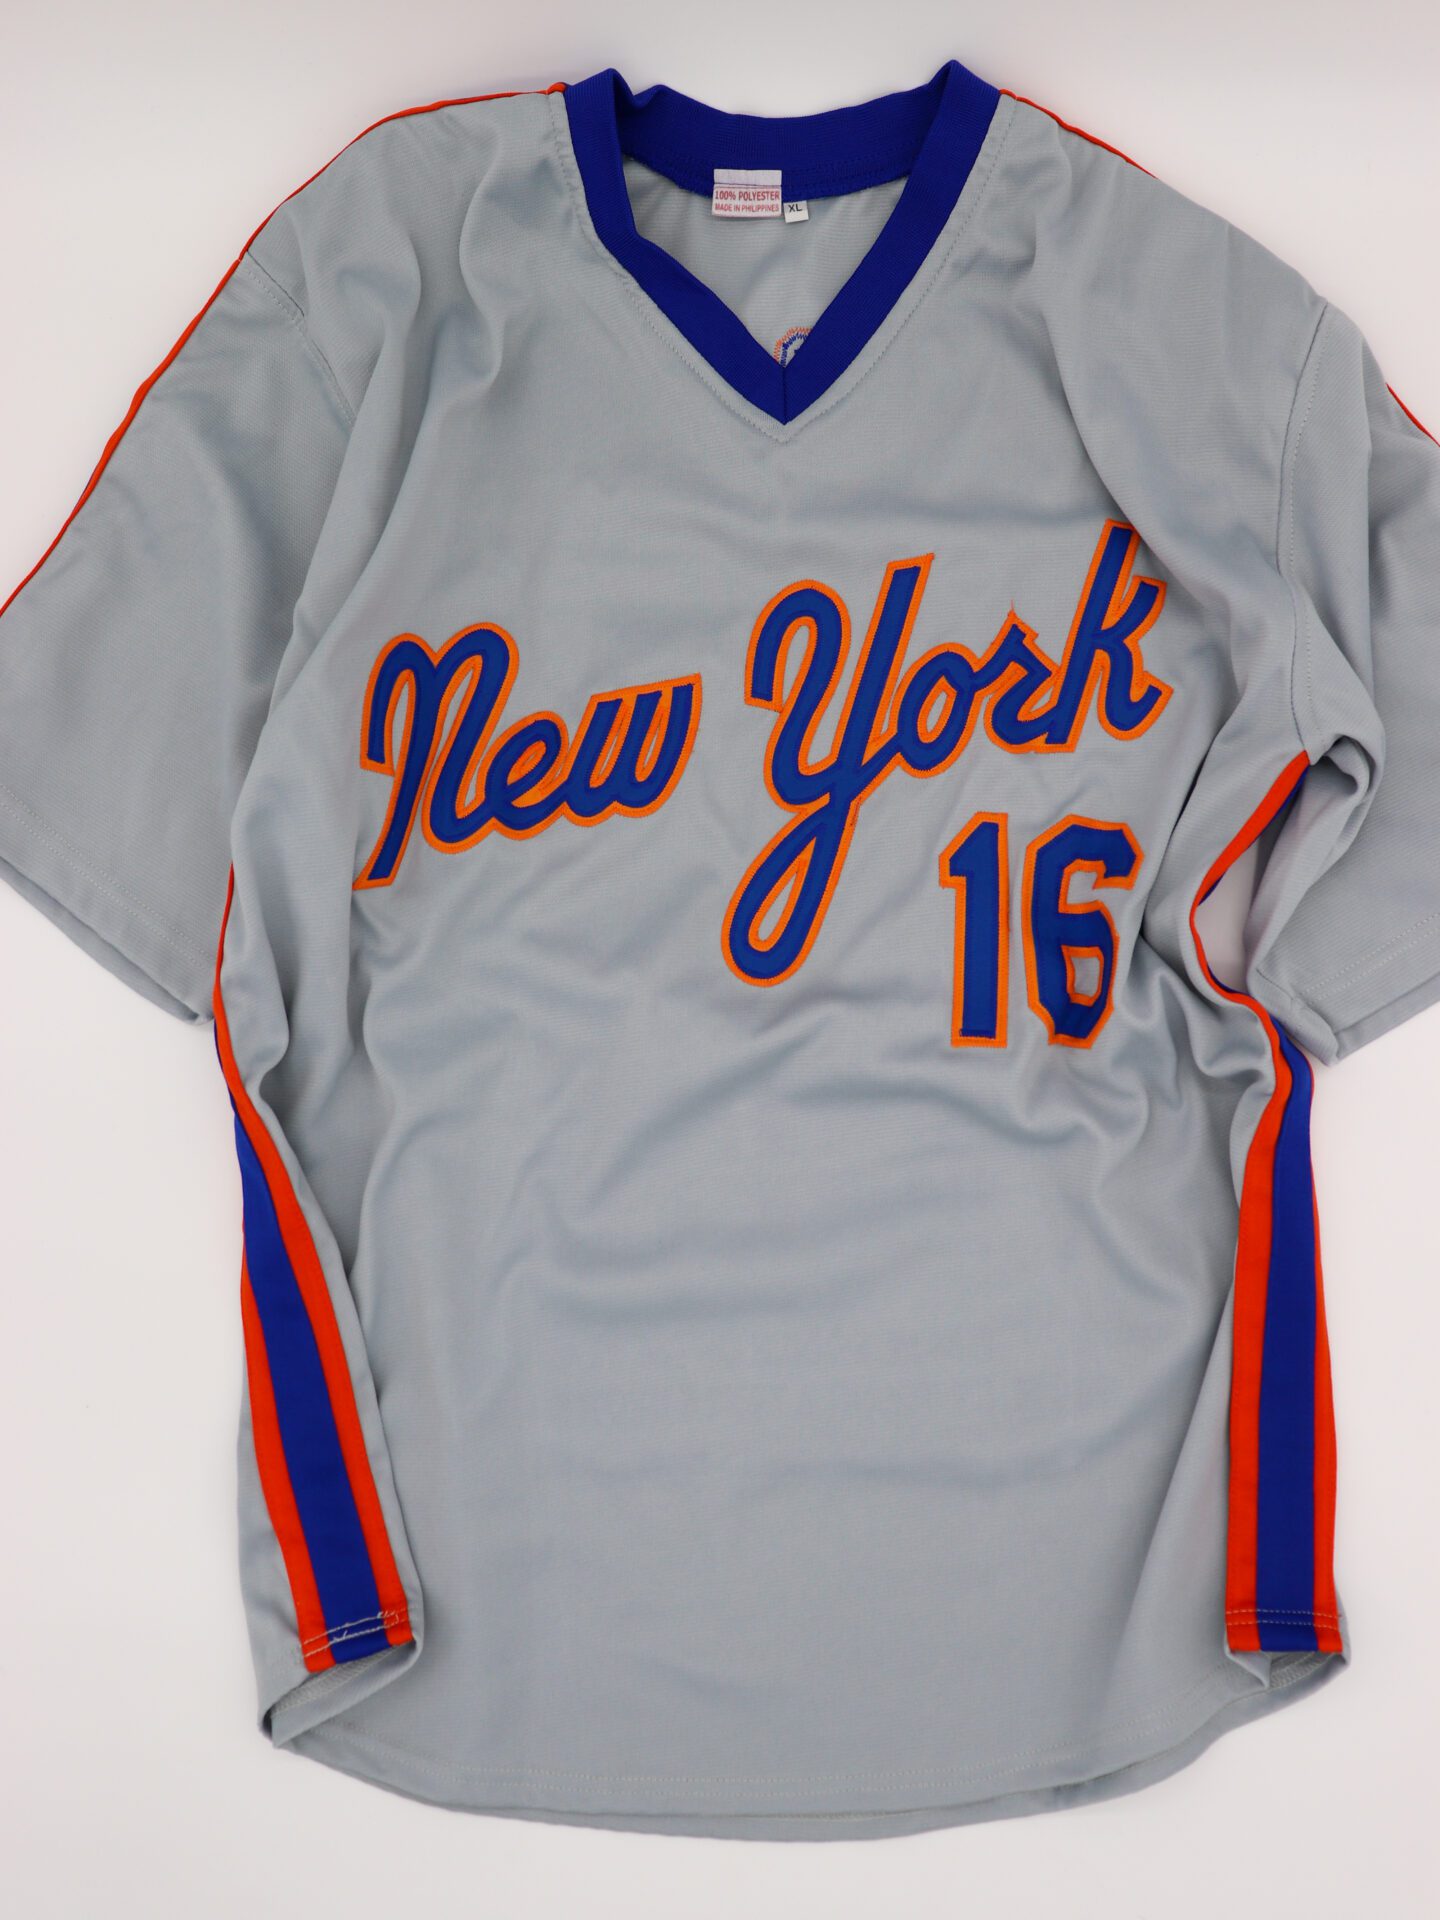 Dwight Gooden Autographed New York Custom Baseball Jersey - BAS COA